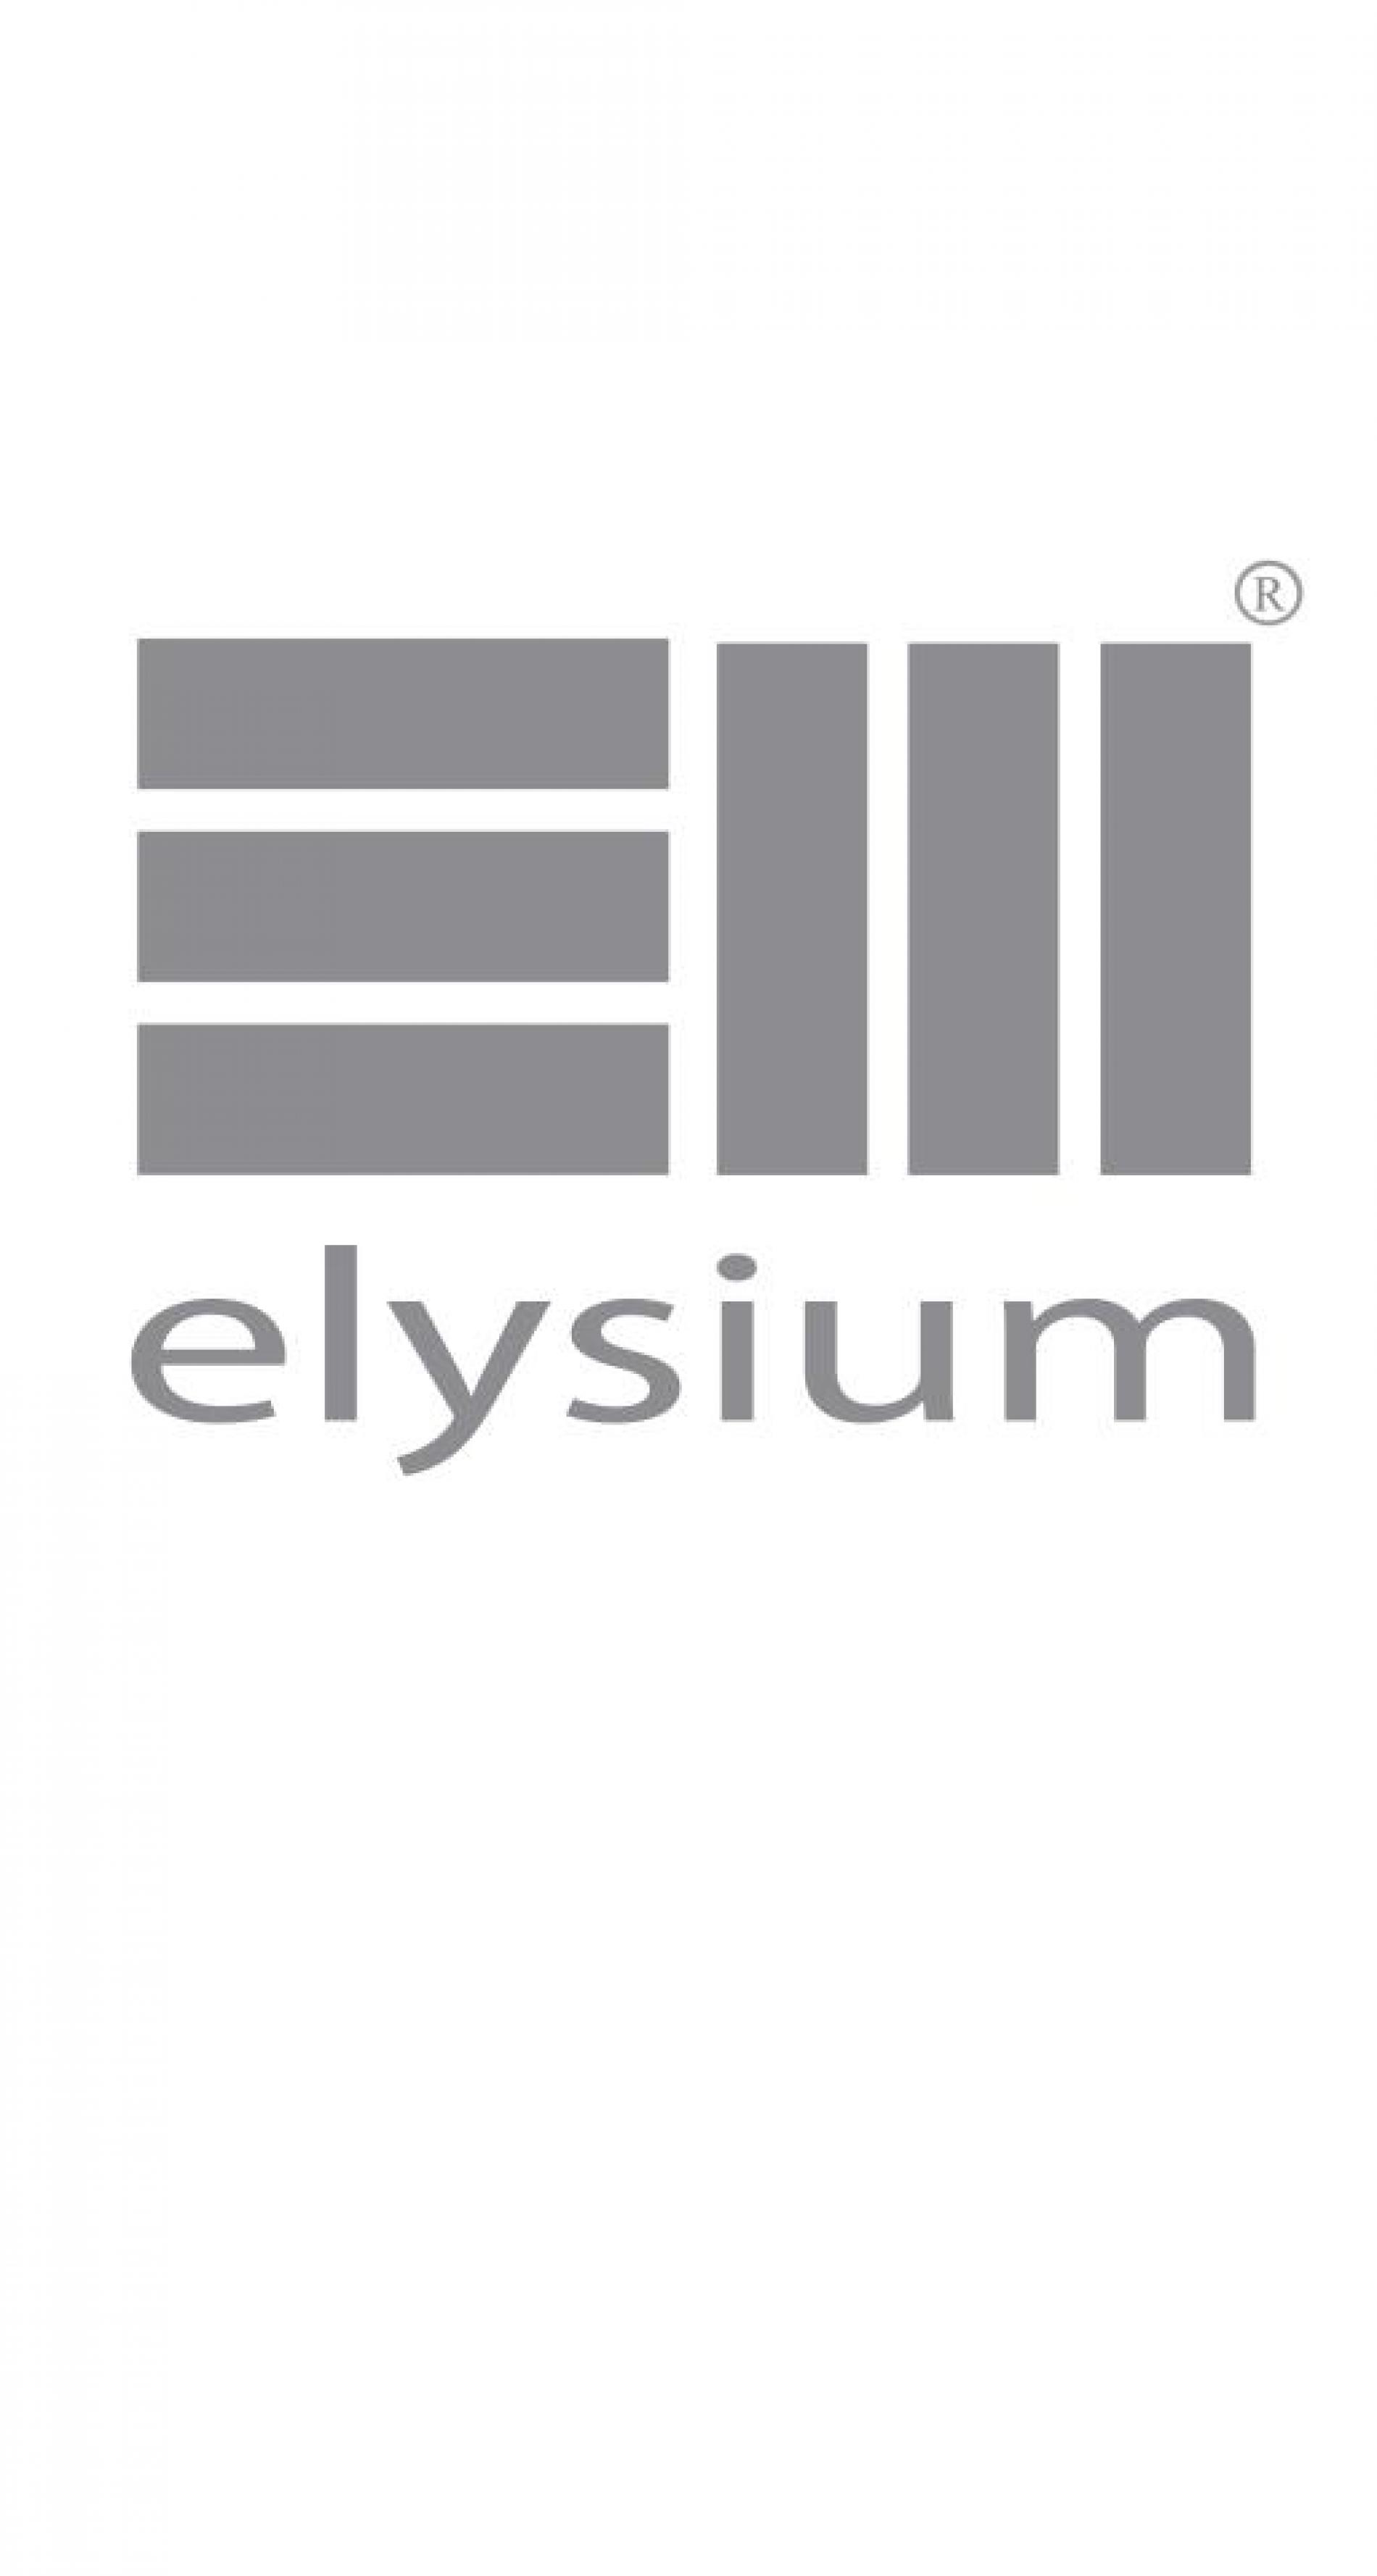 Elysium – Etho Enakkul Is Out